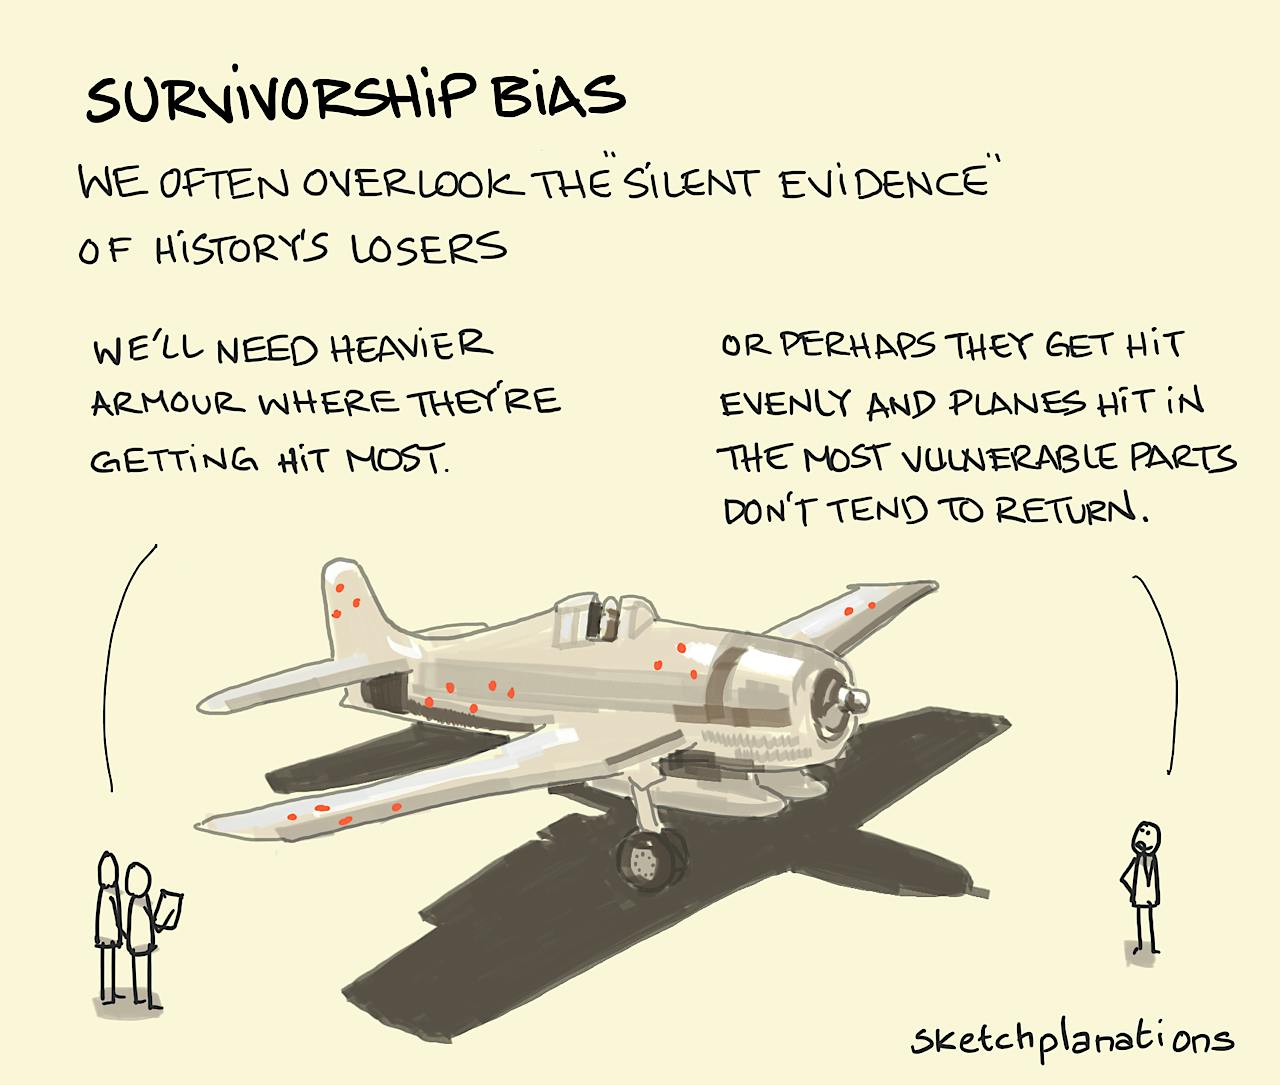 What you should know about survivorship bias